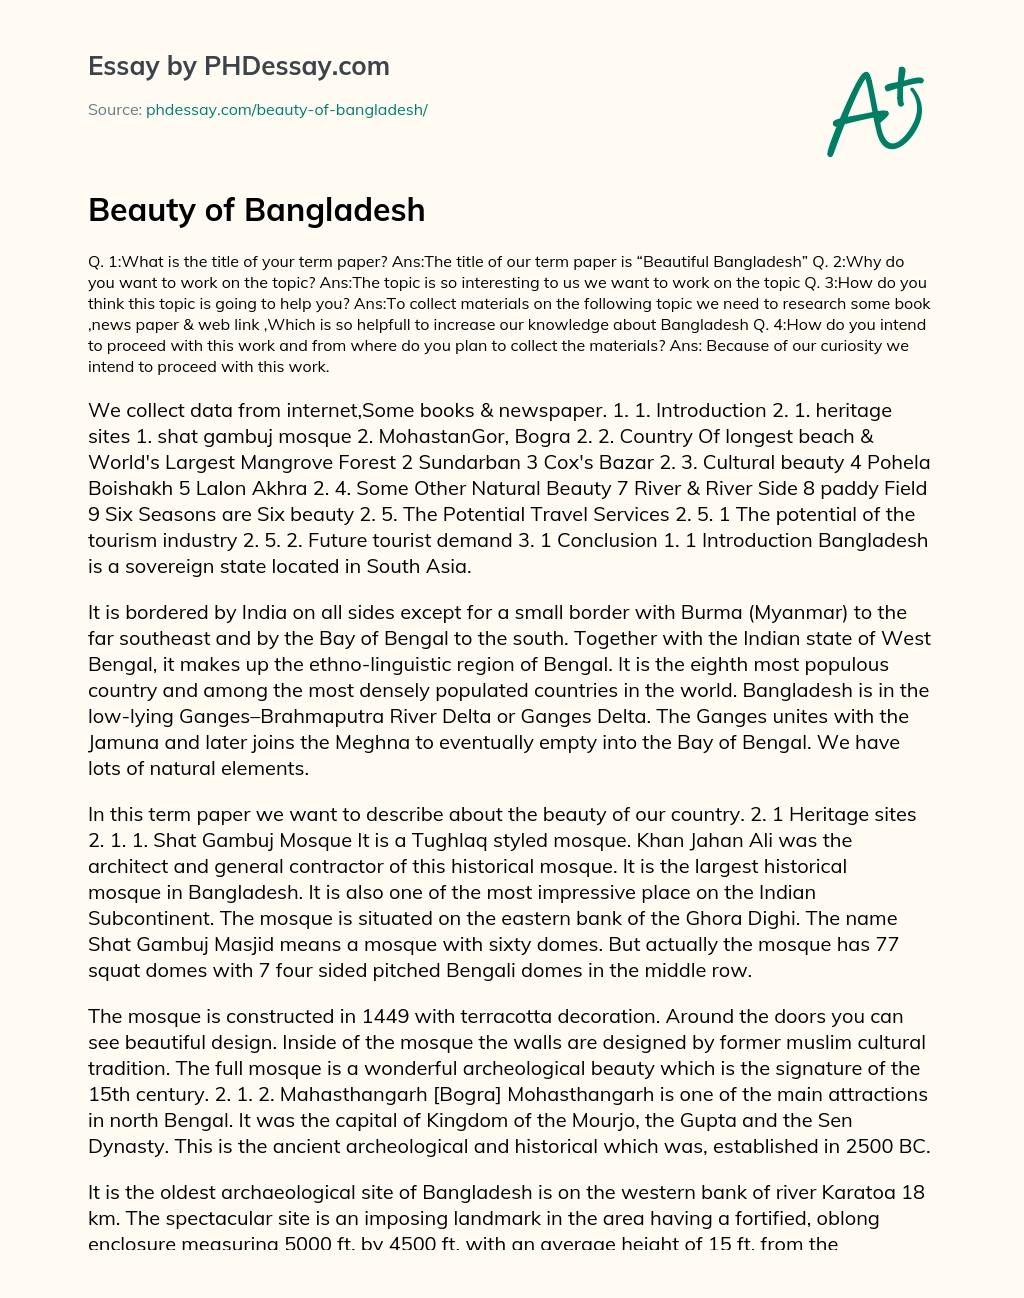 Beauty of Bangladesh essay